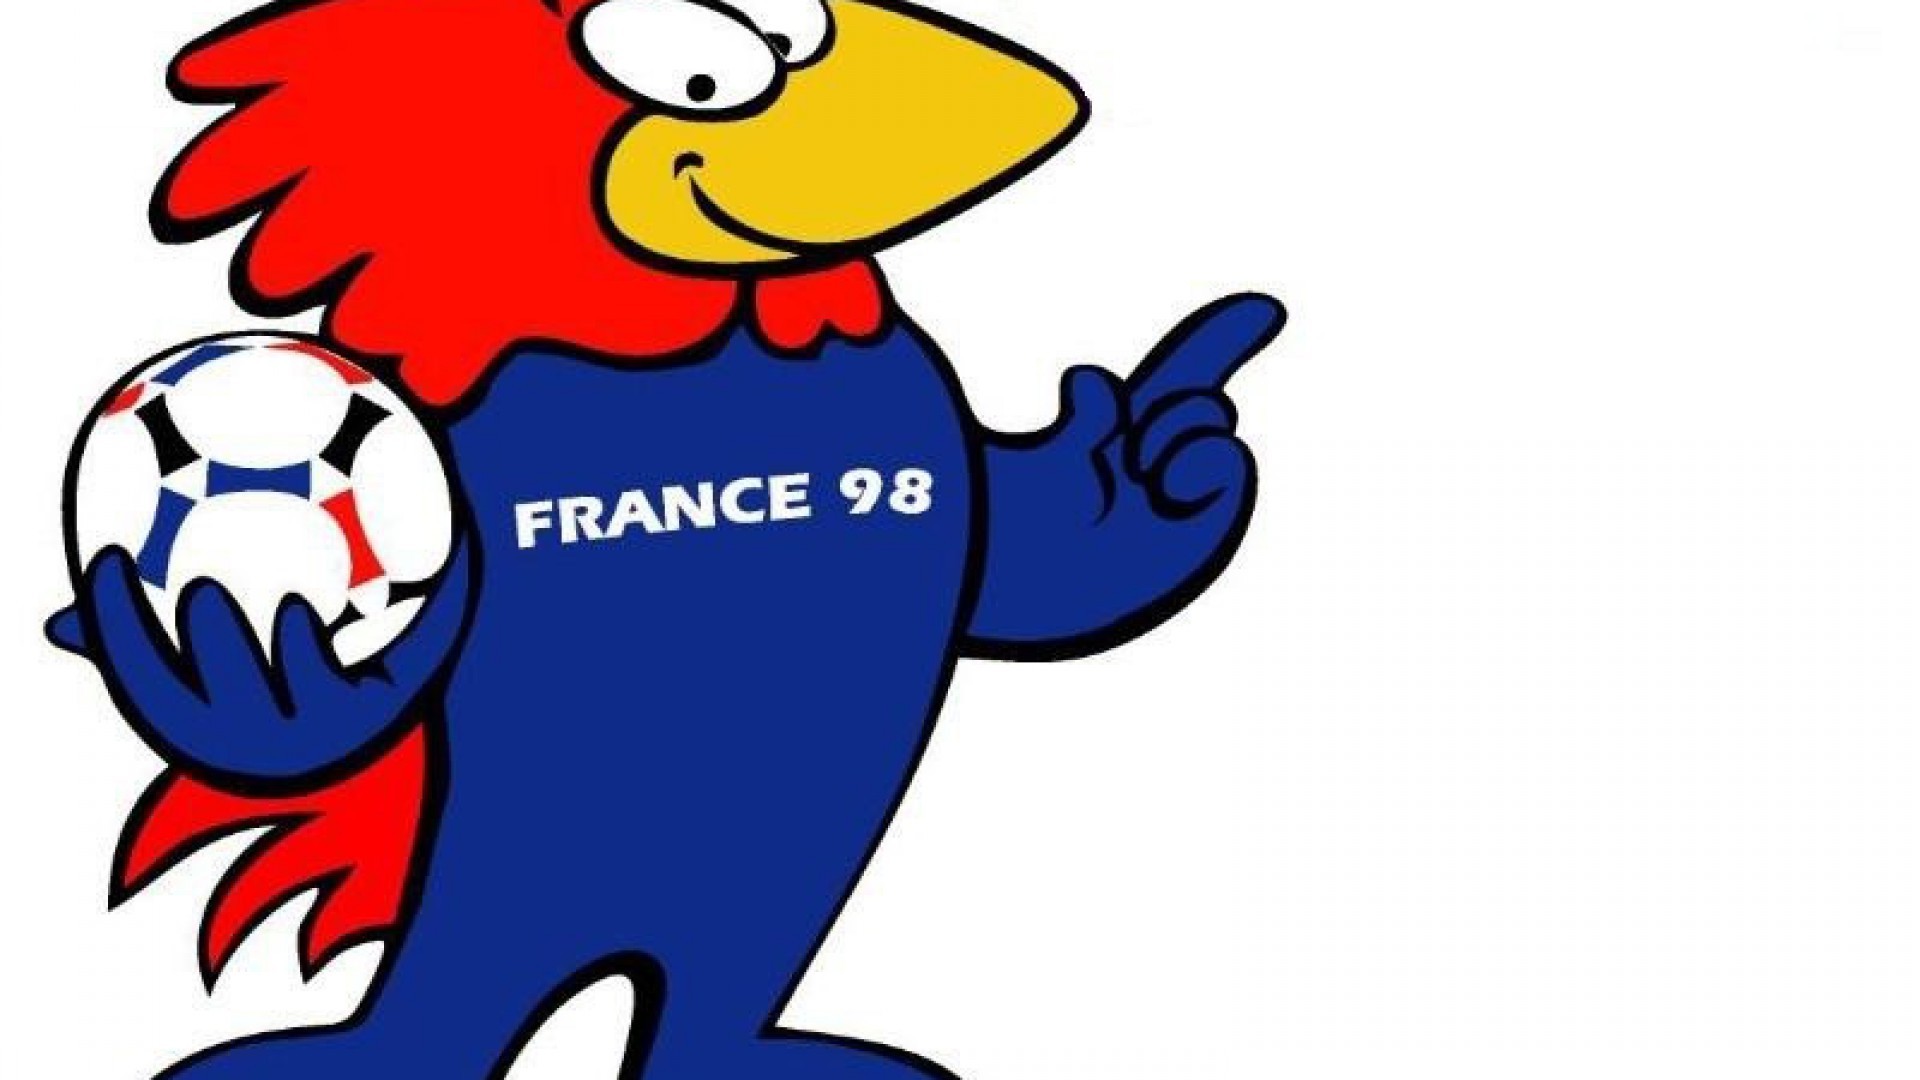 General 1920x1080 FIFA World Cup France soccer 90s sport 1998 (Year) logo soccer ball